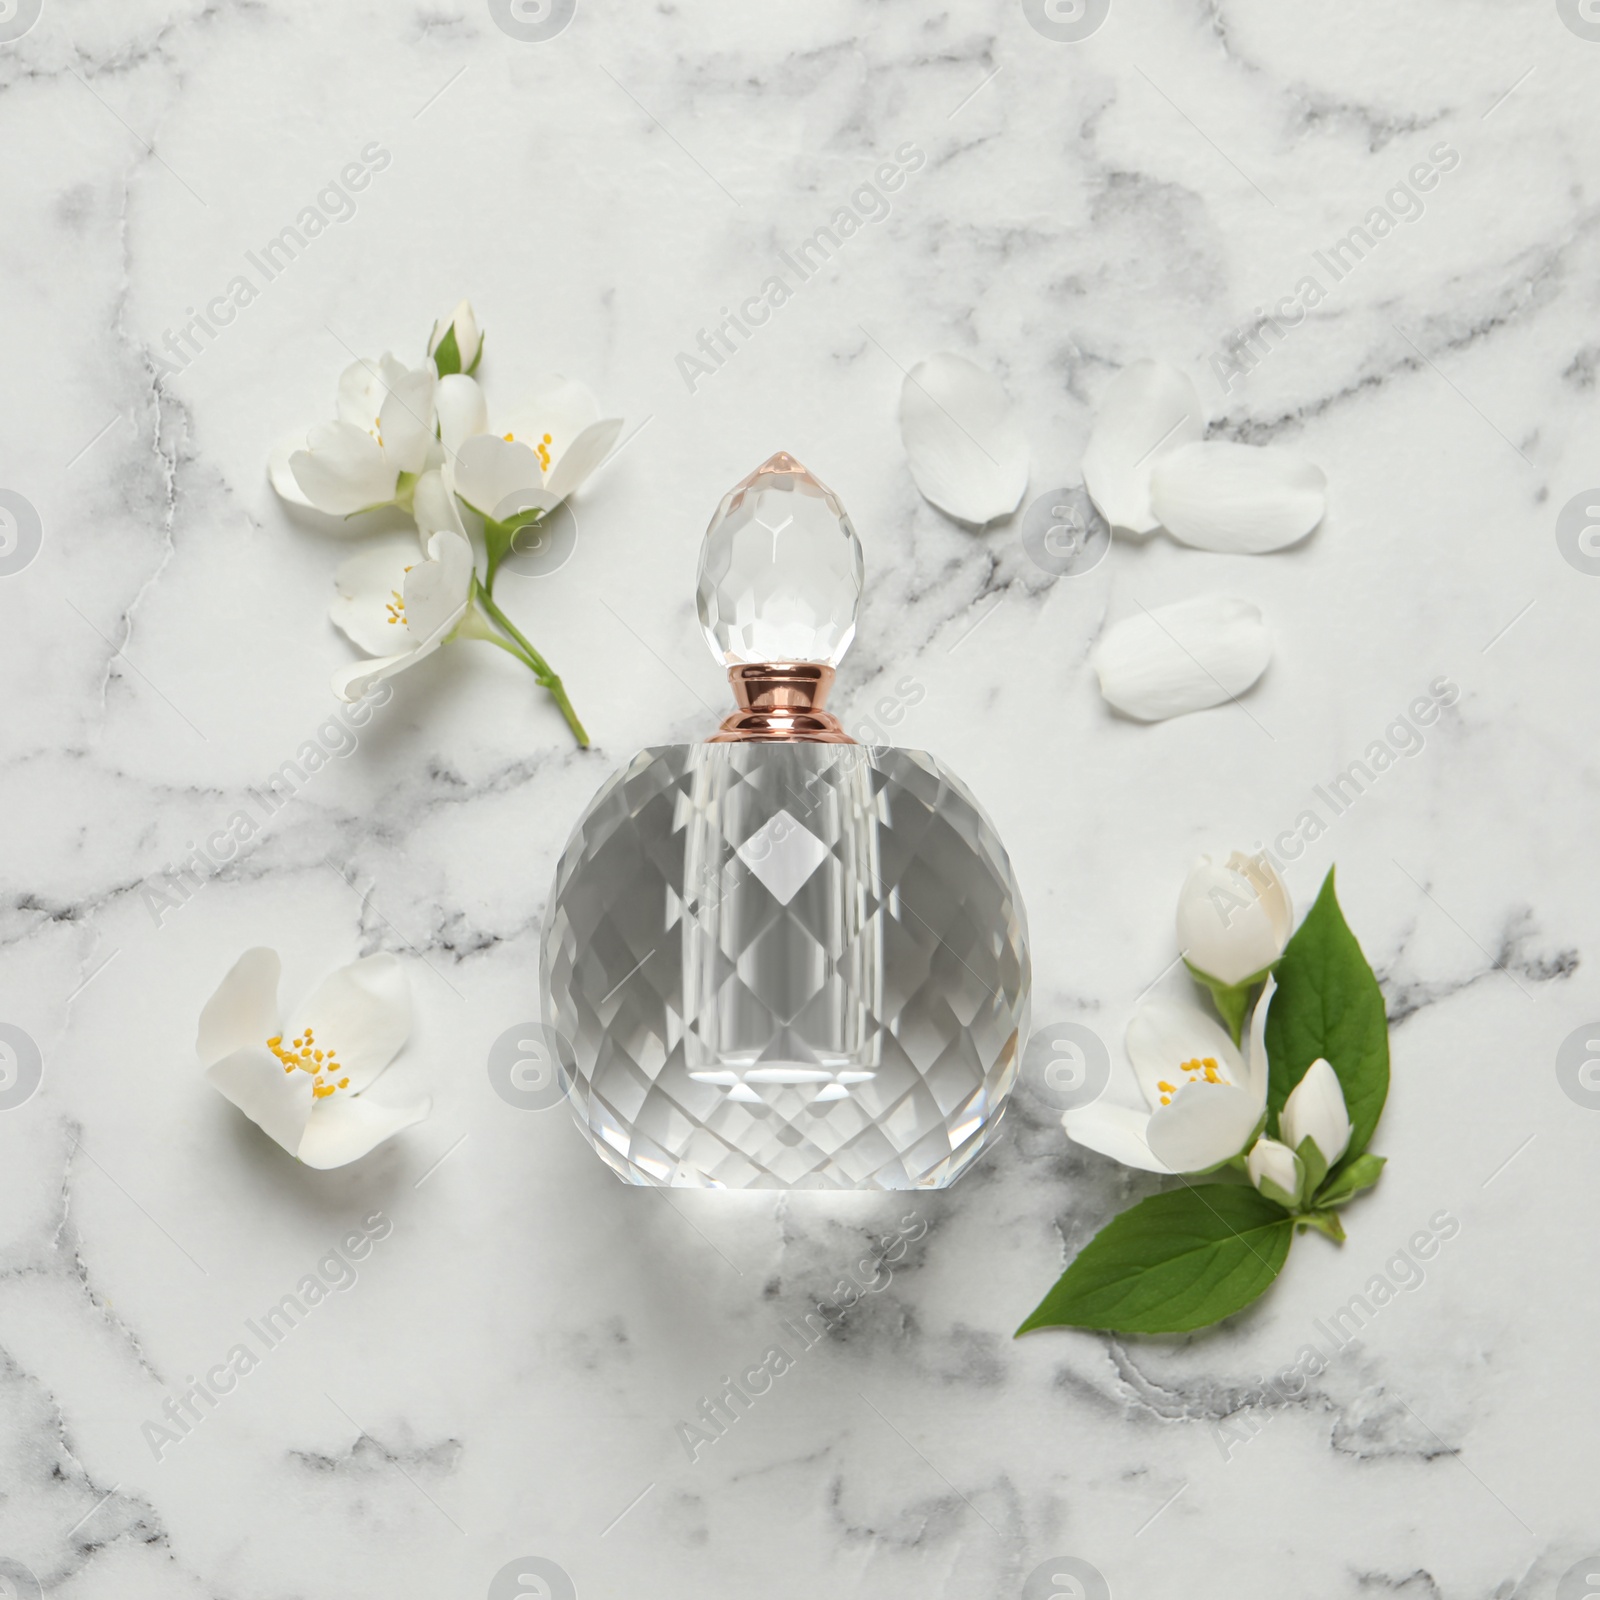 Photo of Bottle of luxury perfume and fresh jasmine flowers on white marble table, flat lay